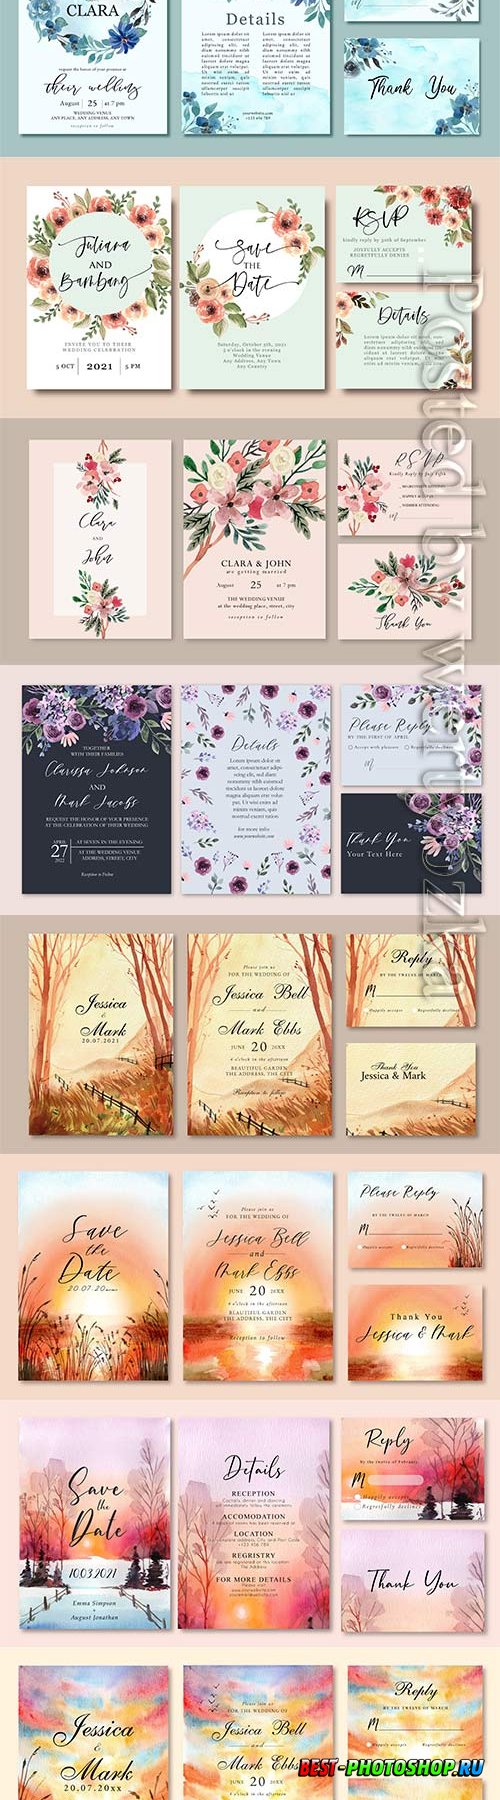 Wedding invitation card design with flower